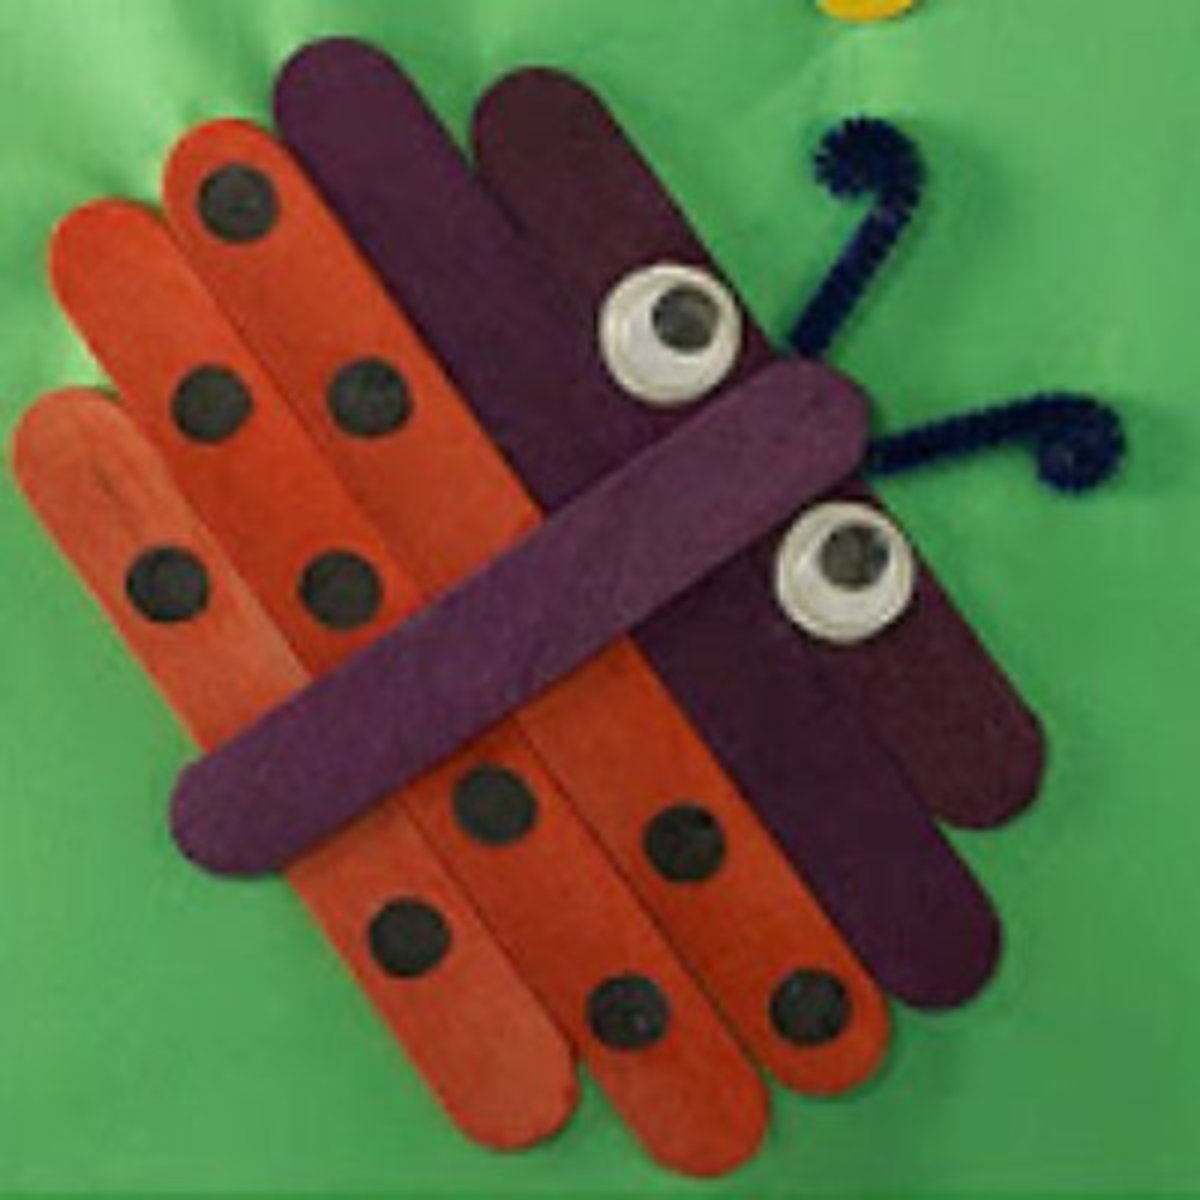 Craft stick ladybug